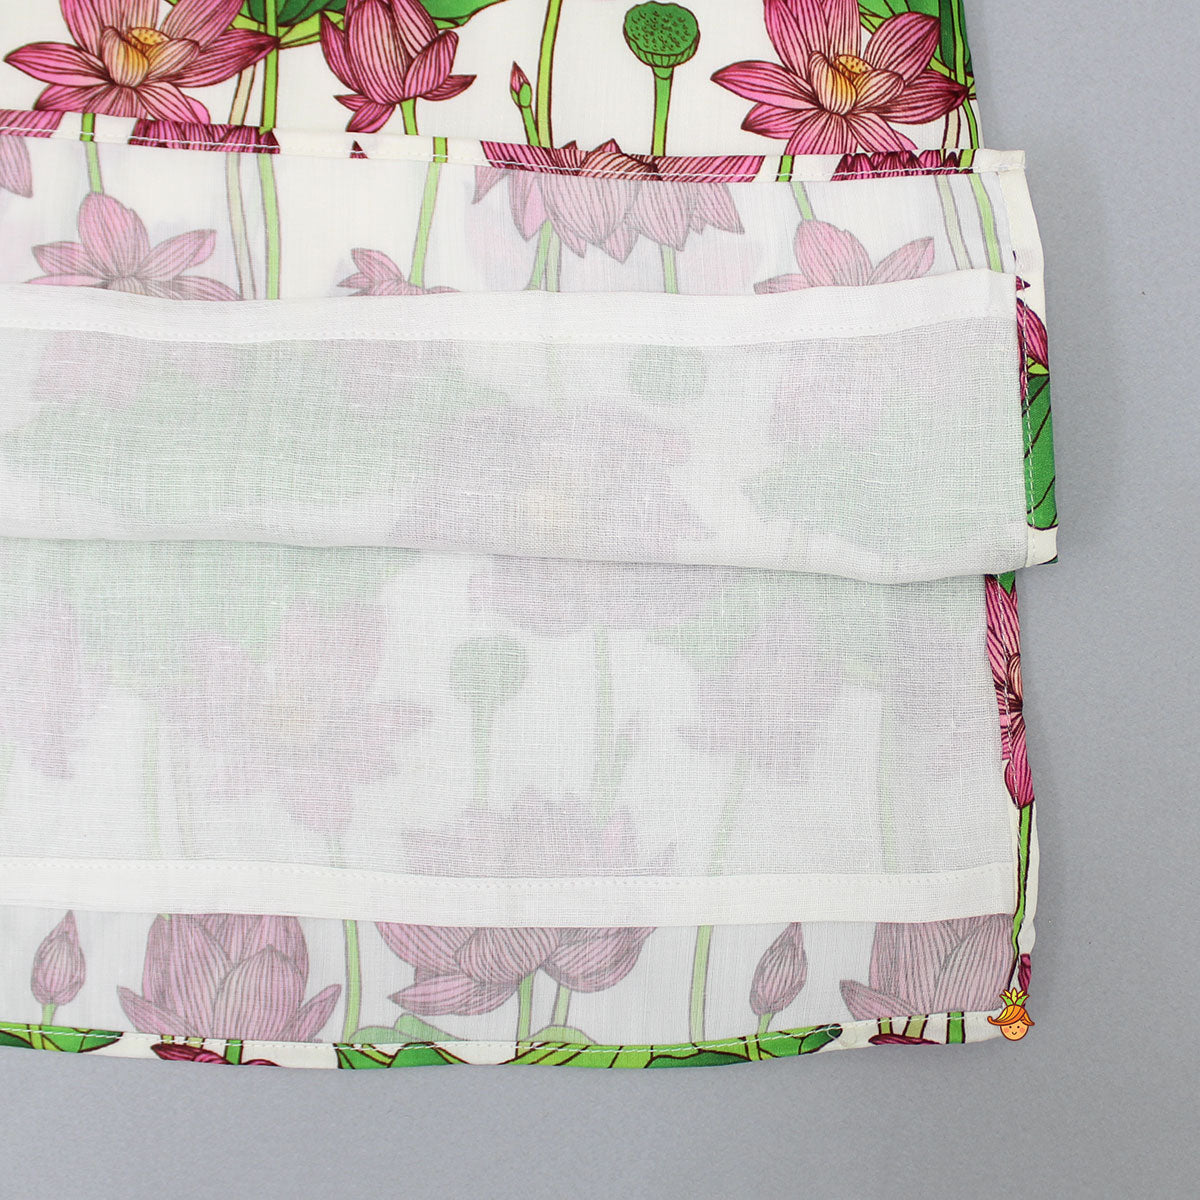 Pre Order: Lotus Printed Kurta And Embroidered Jacket With Pyjama